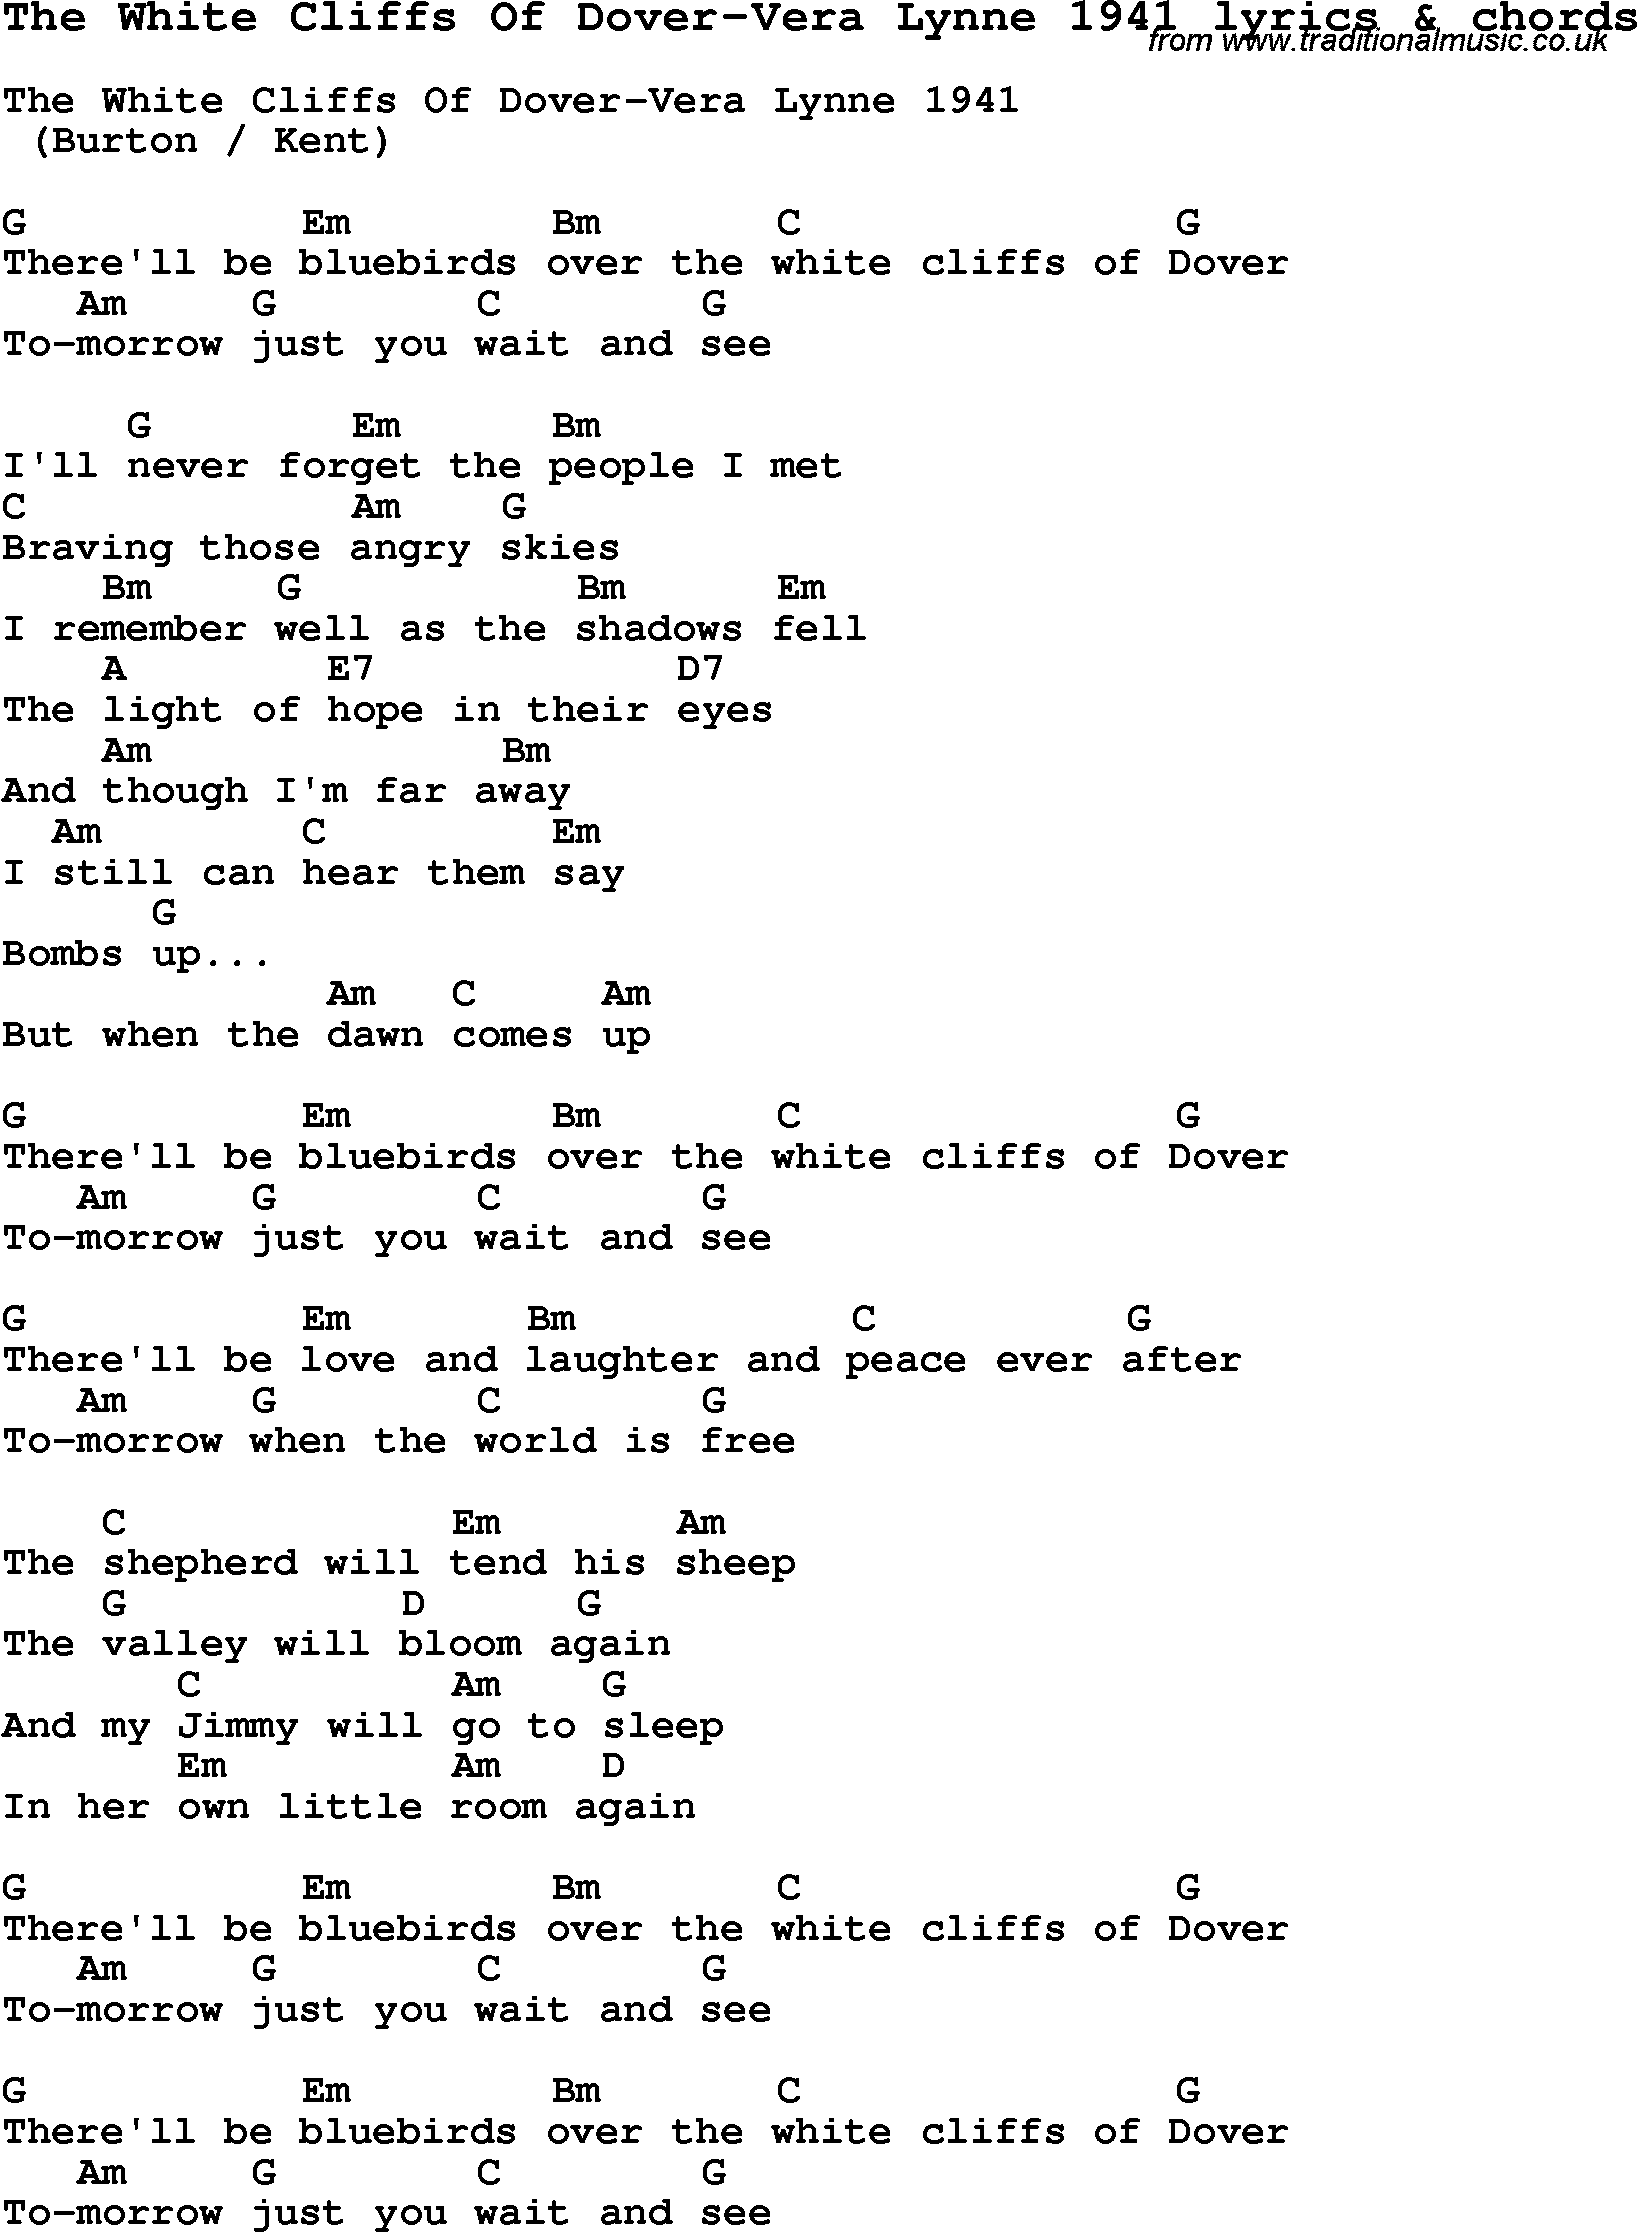 Love Song Lyrics for: The White Cliffs Of Dover-Vera Lynne 1941 with chords for Ukulele, Guitar Banjo etc.